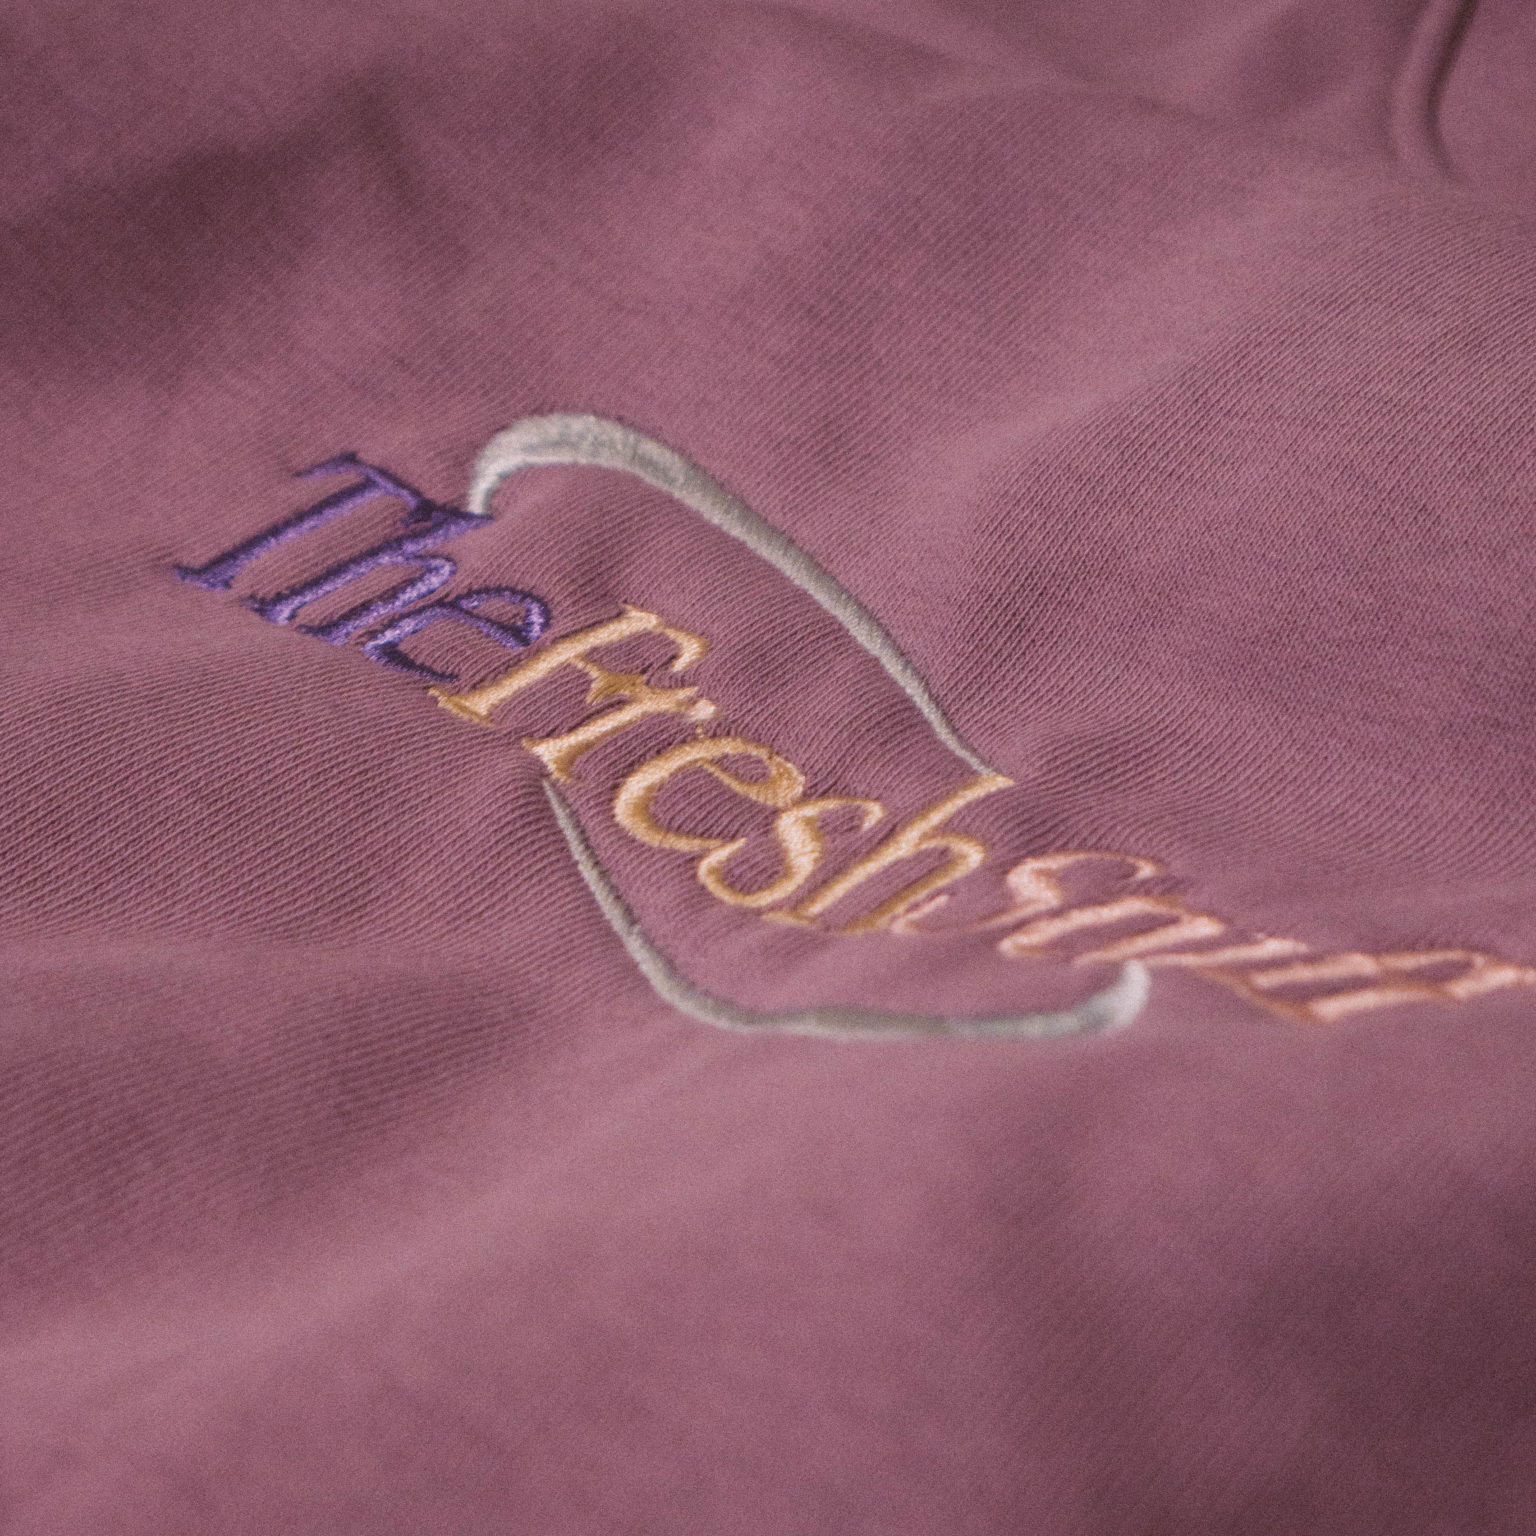 The Fresh Stuff - Retro Logo Unisex Embroidered Premium Heavy Sweater (Lilac)